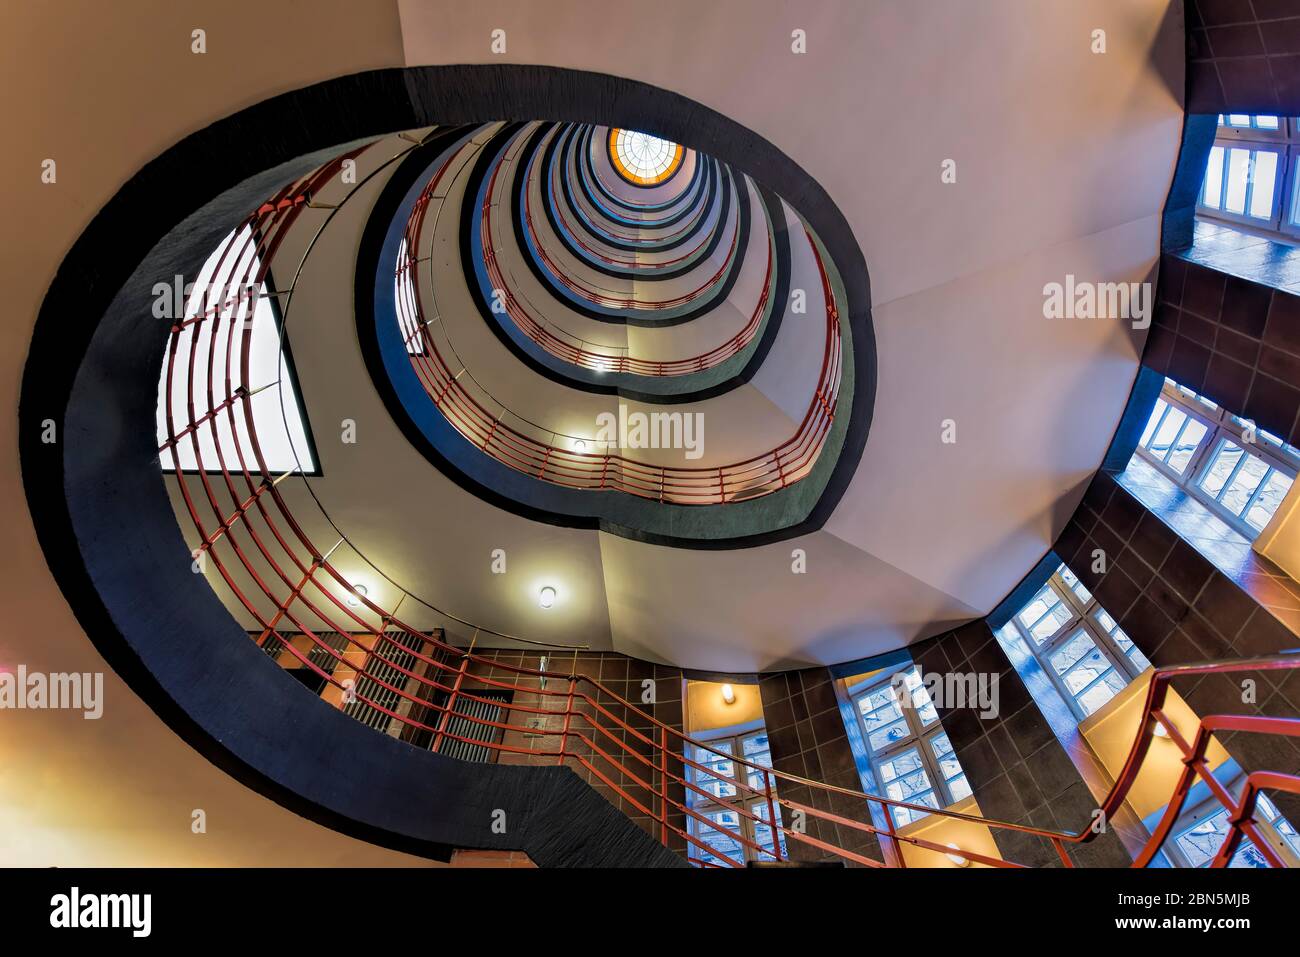 Spiral staircase from below, Sprinkenhof, interior view, Kontorhausviertel, Hamburg, Germany Stock Photo